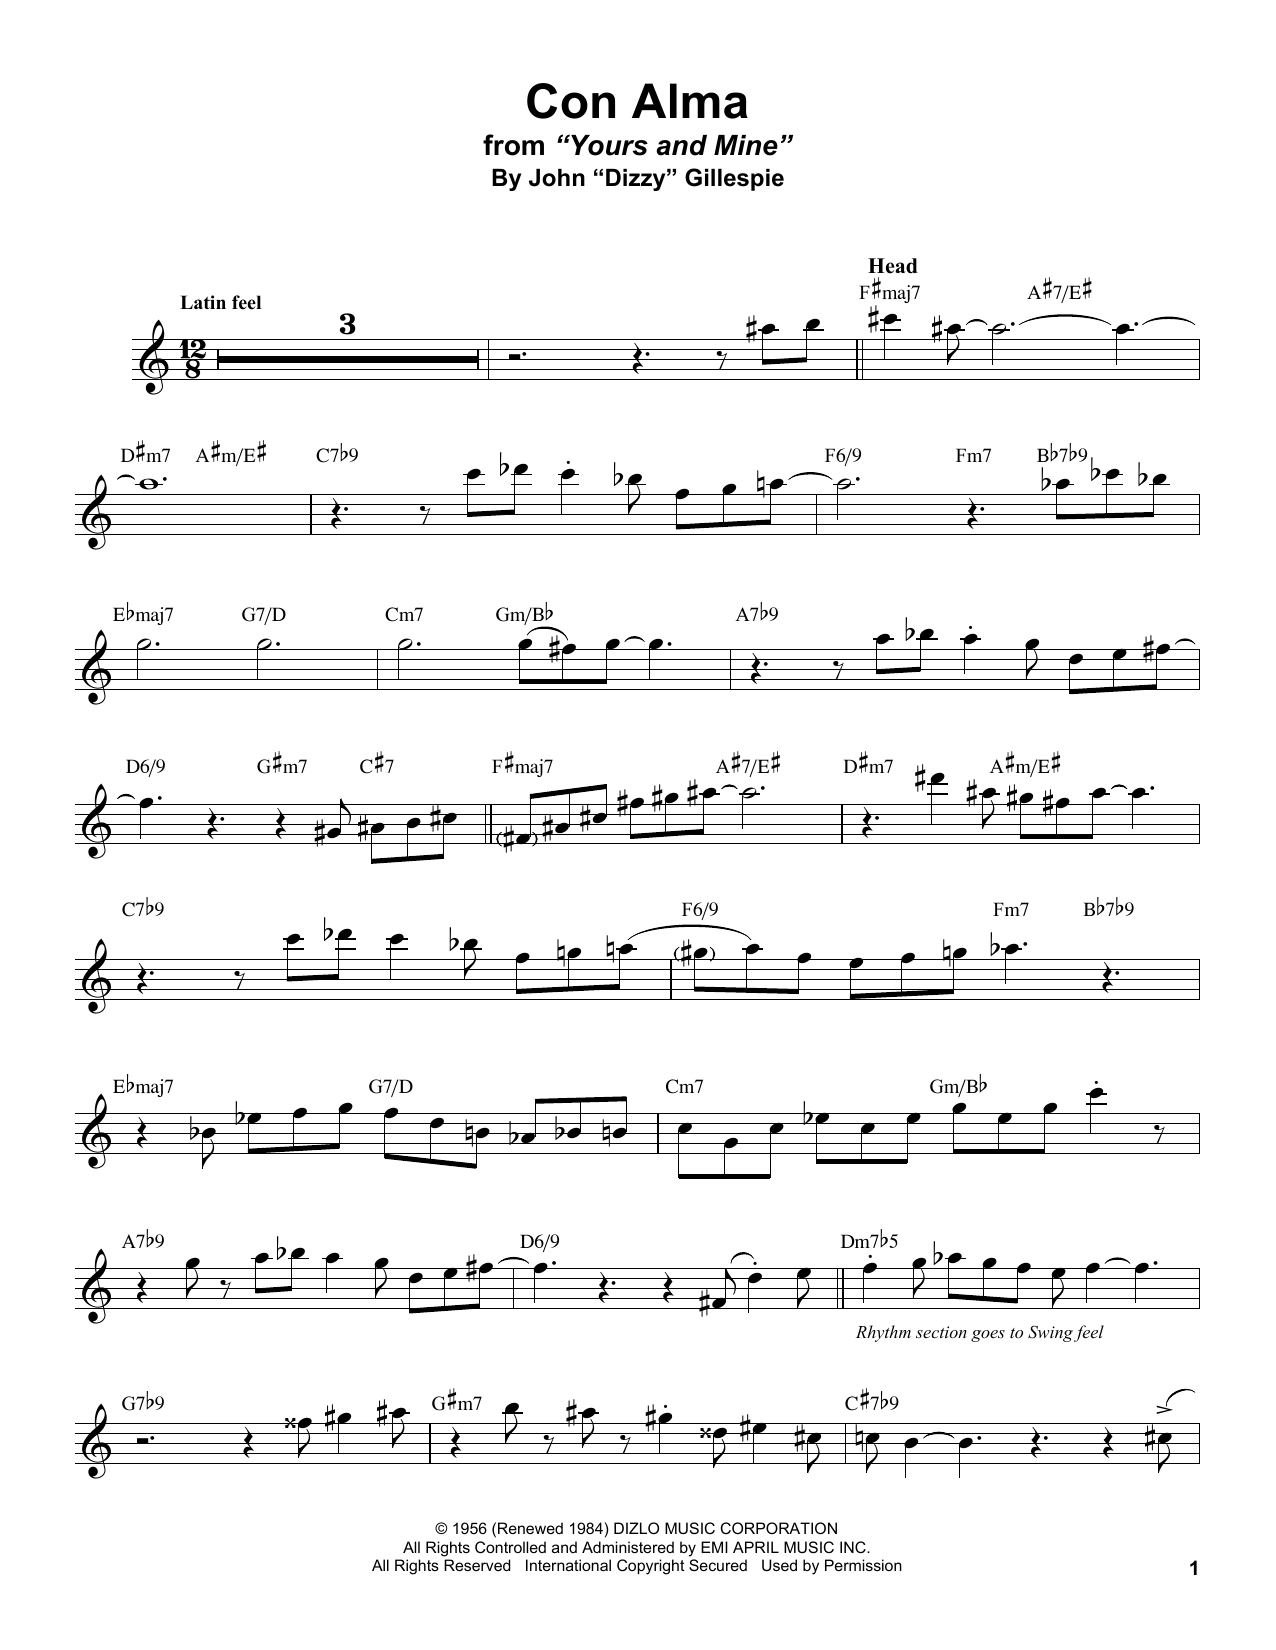 Stan Getz Con Alma Sheet Music Notes & Chords for Alto Sax Transcription - Download or Print PDF